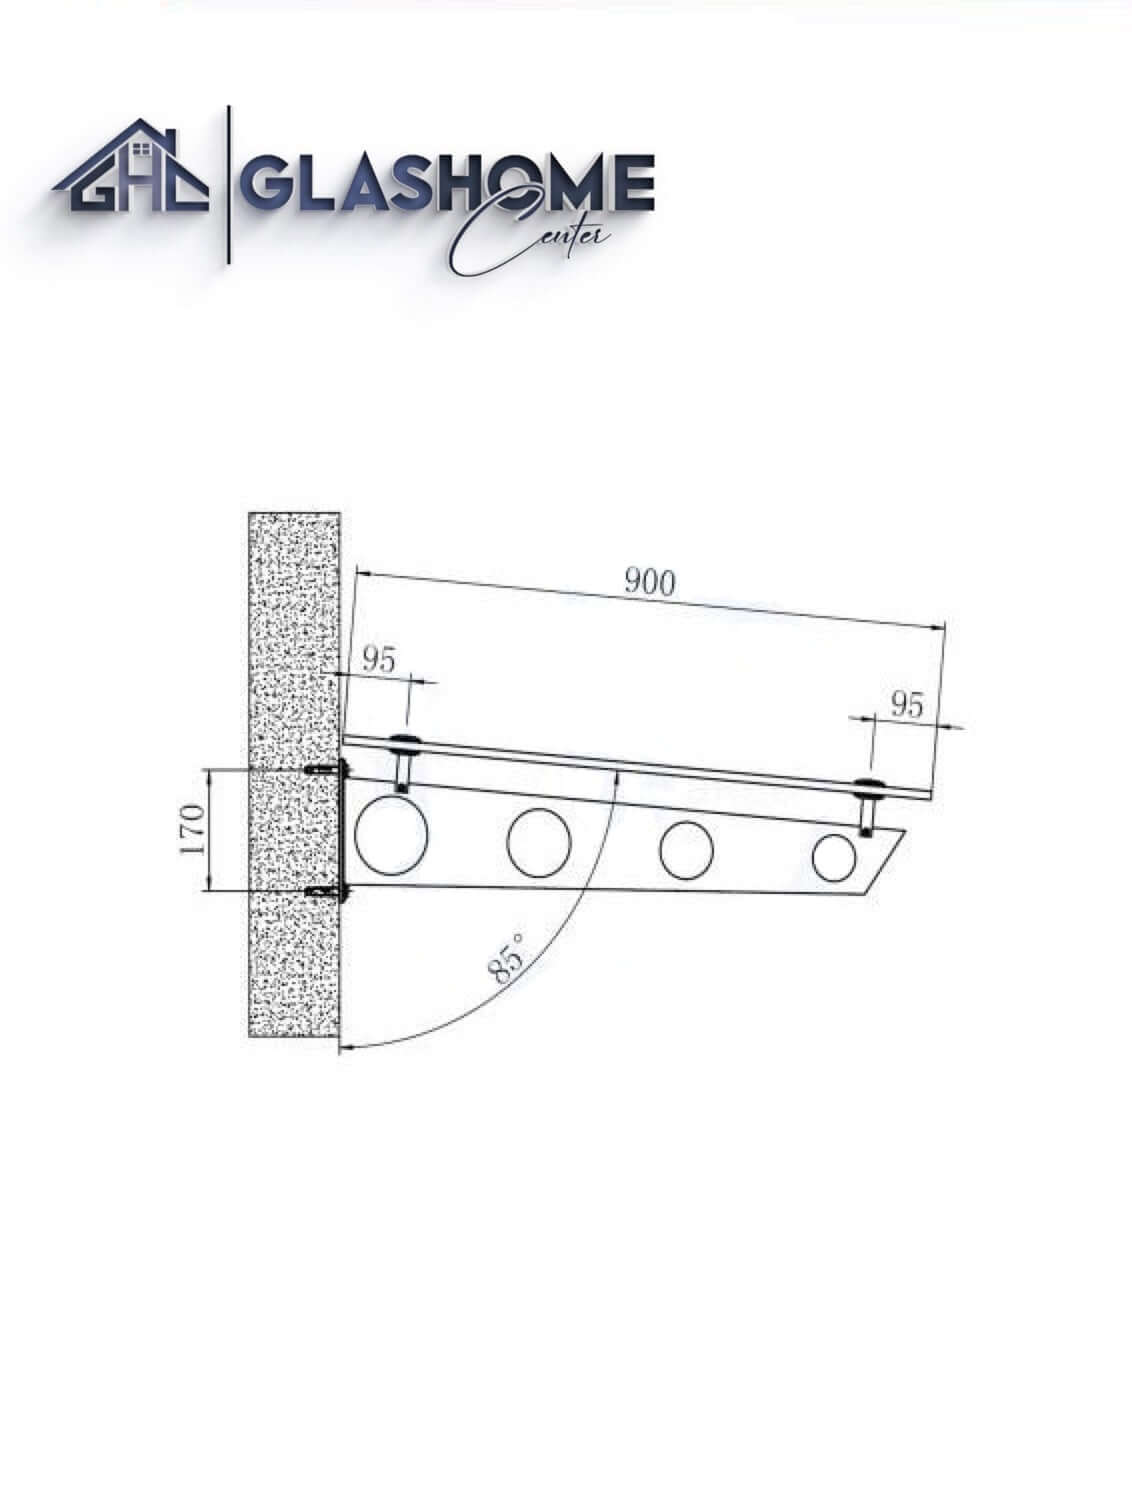 GlasHomeCenter - glass canopy - Clear glass - 160x90cm - 13.1mm VSG - incl. 2 Edelstahlhalterungen Variant "Stockholm"